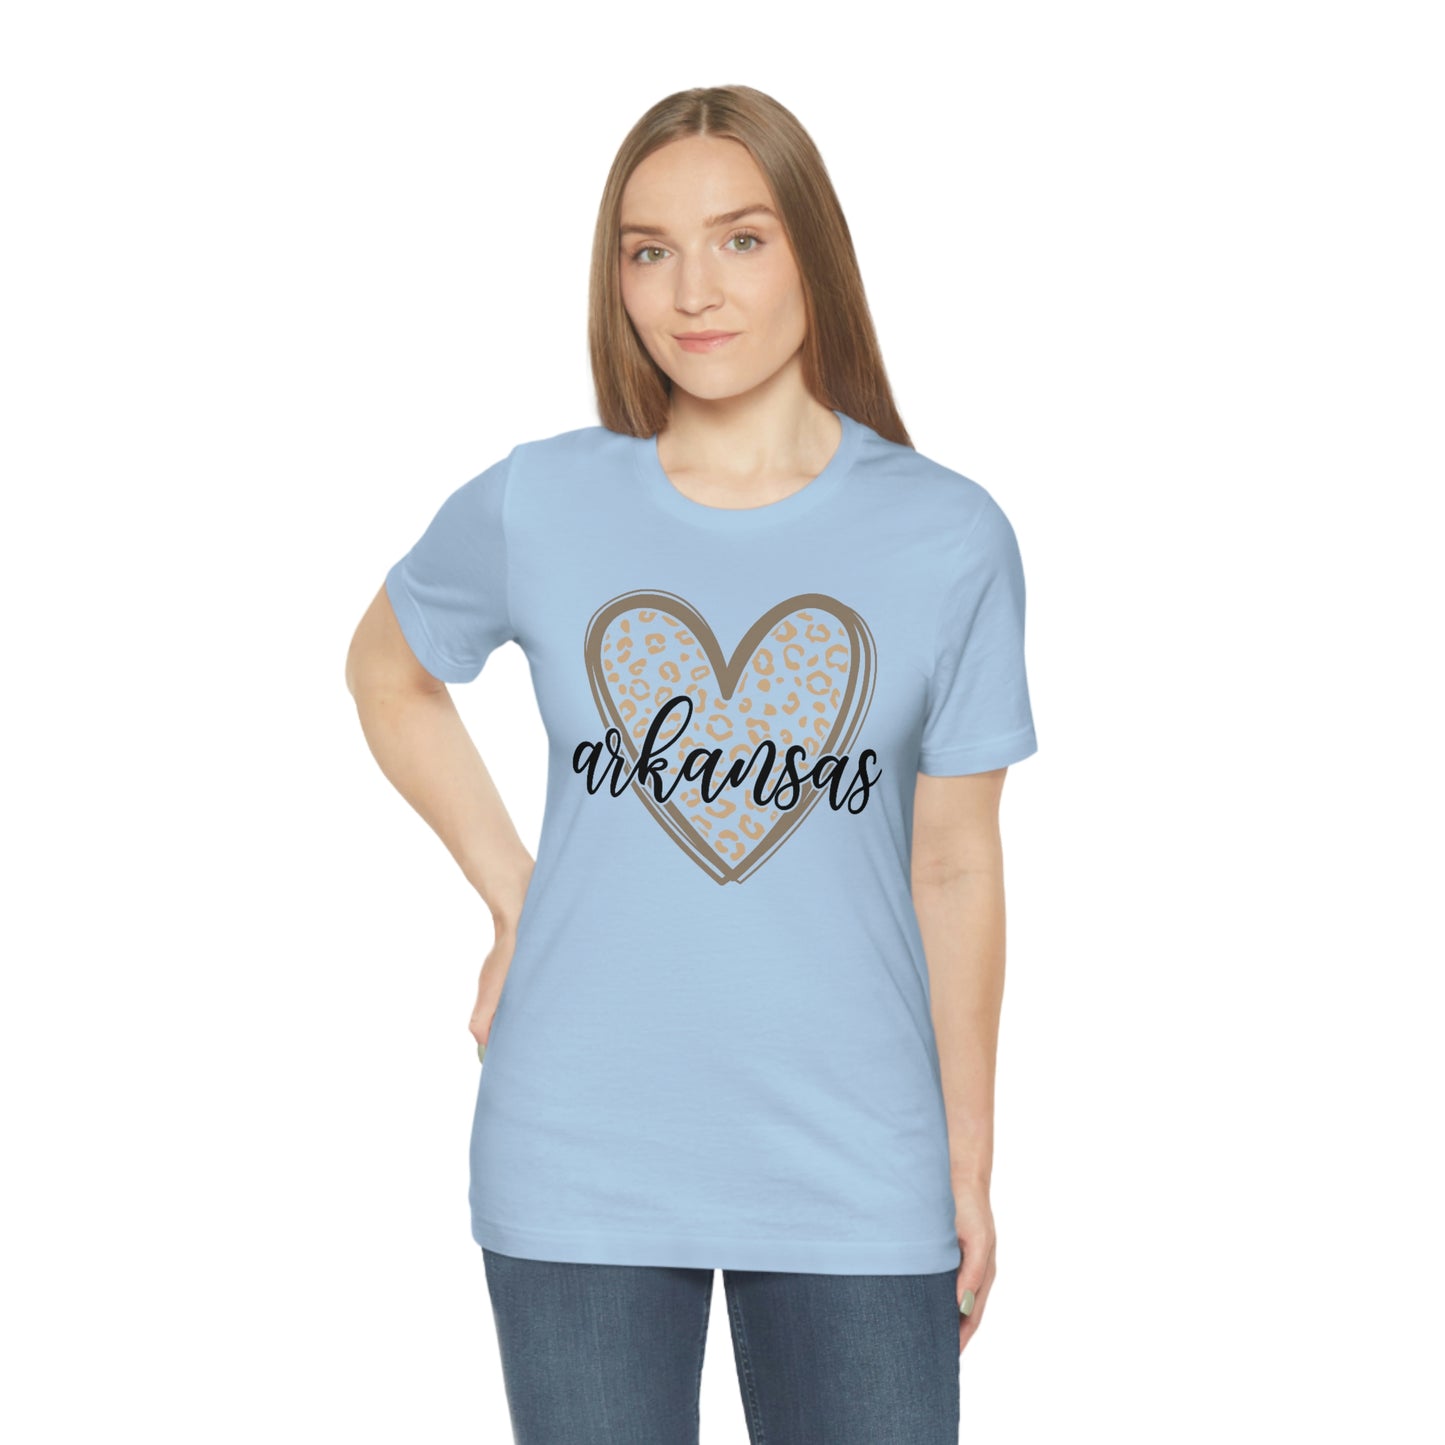 Arkansas Heart Leopard Print US Flag Unisex Jersey Short Sleeve Tee Tshirt T-shirt